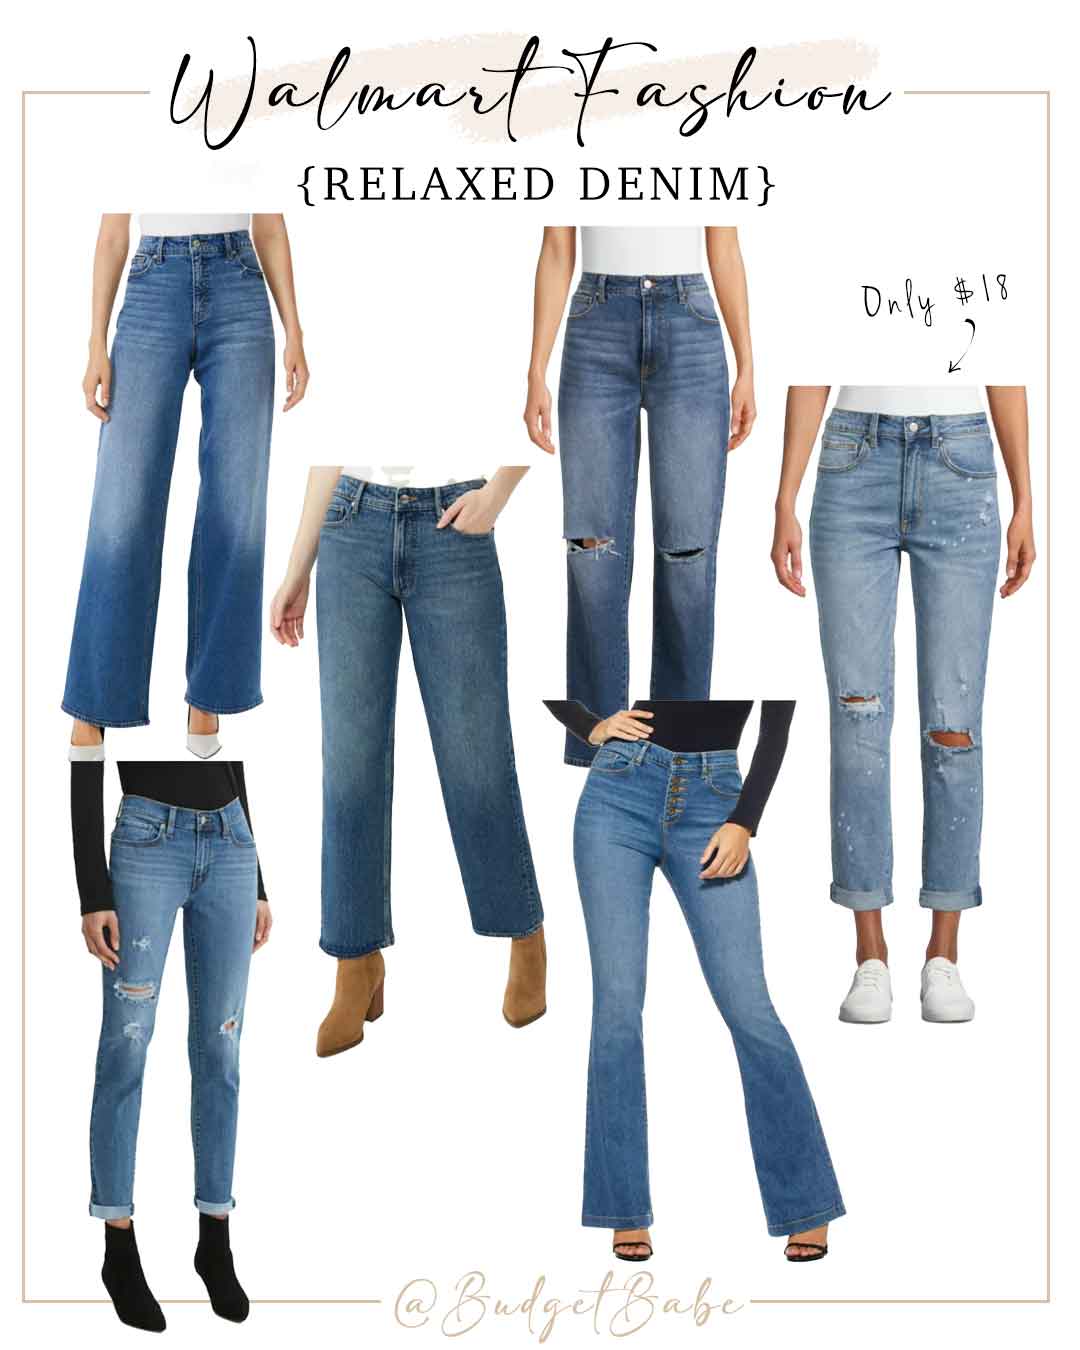 Walmart Fashion Fall Edit | Relaxed Denim from $18